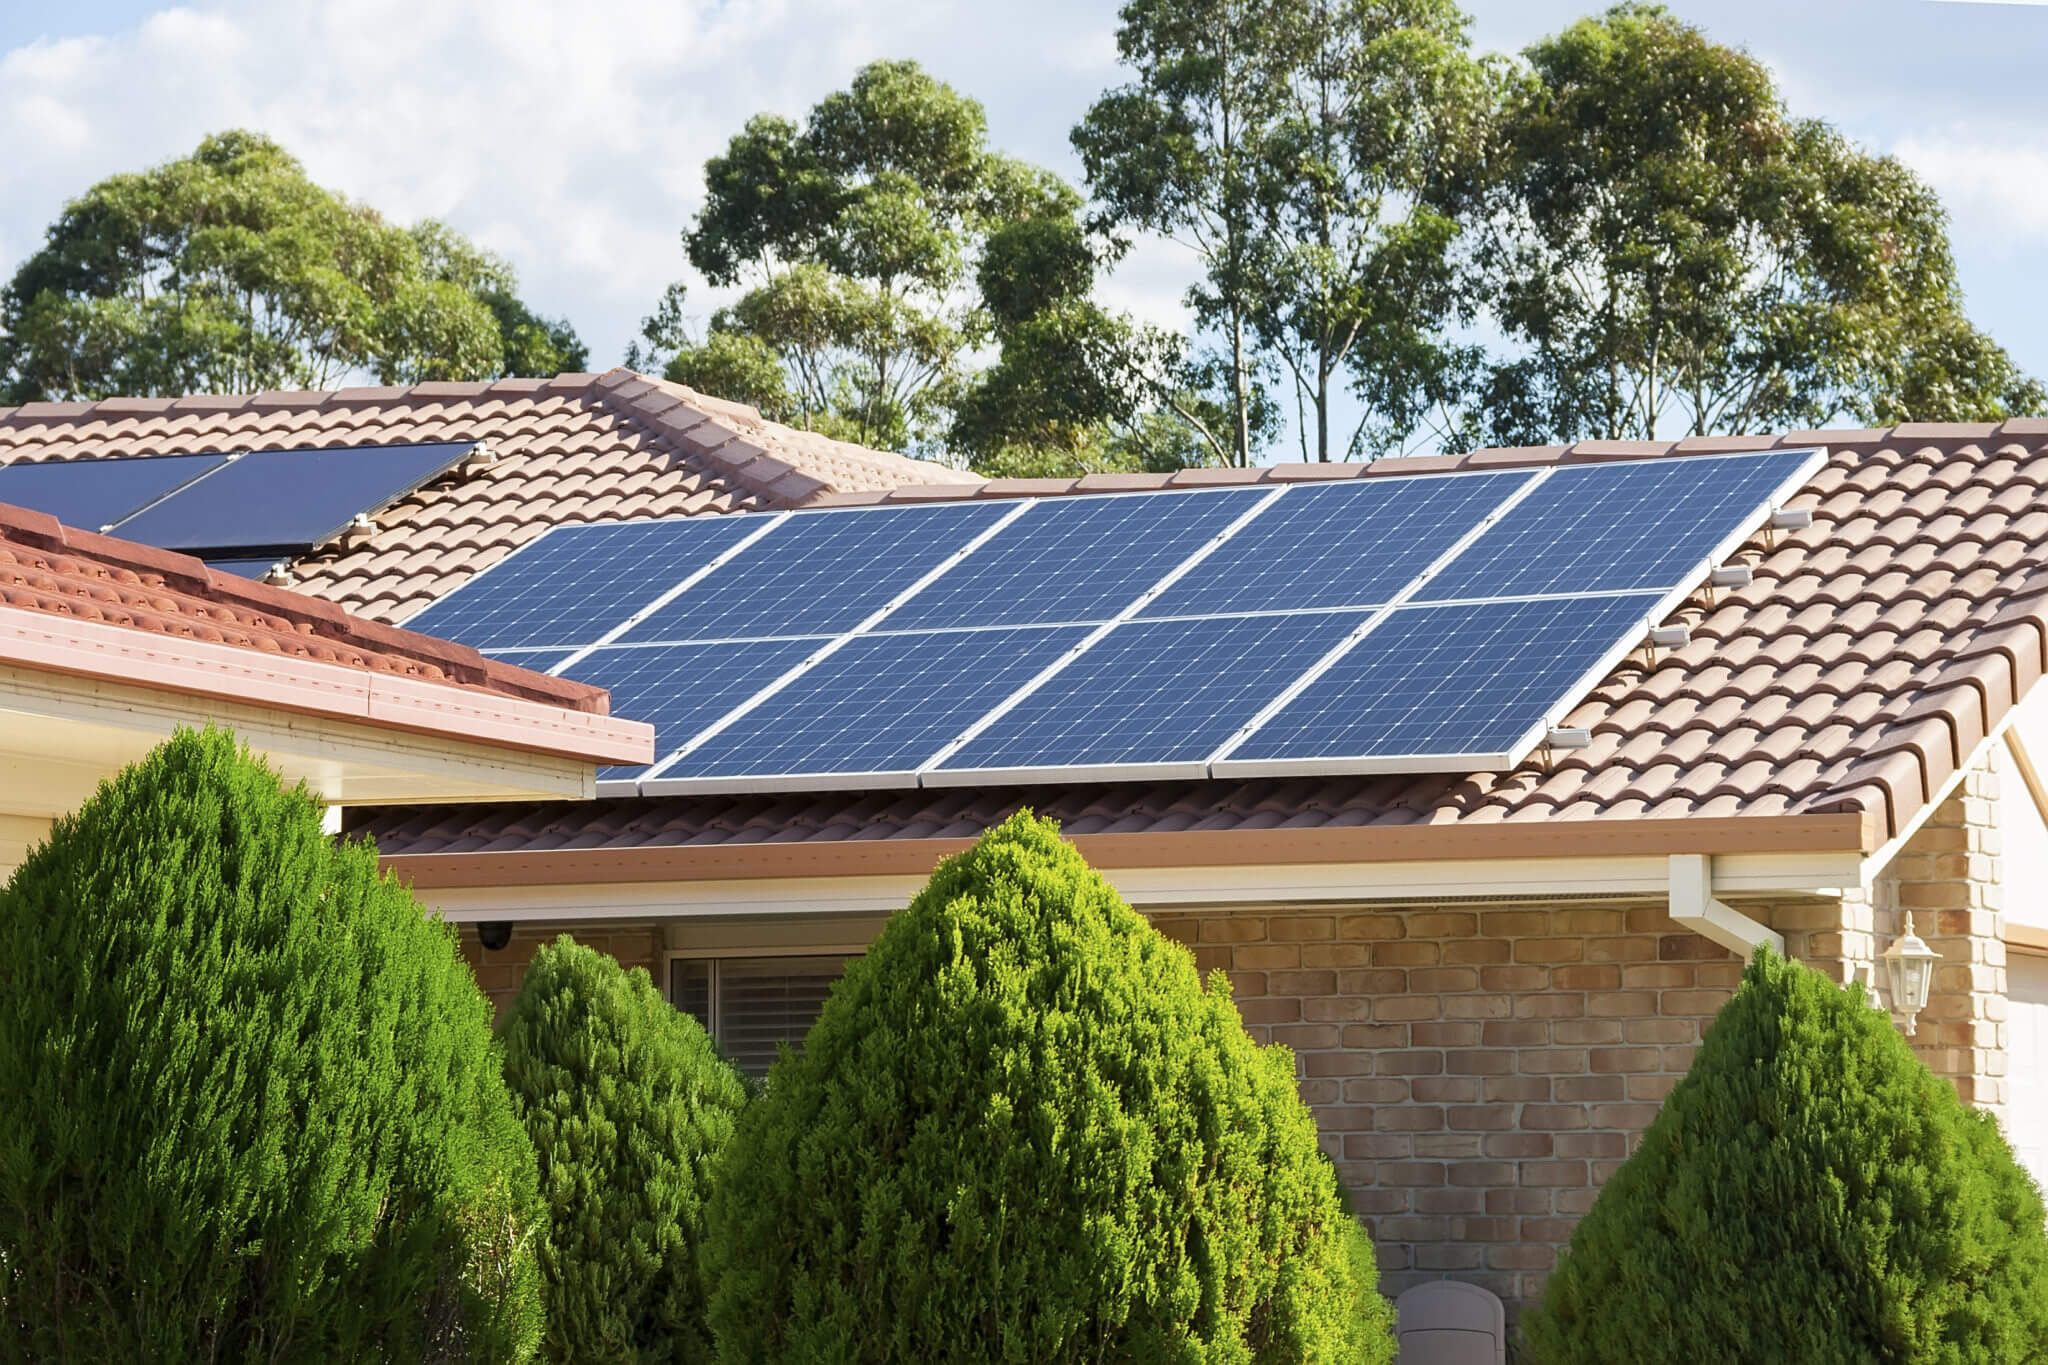 Precautions for Safe Solar Panel Installation